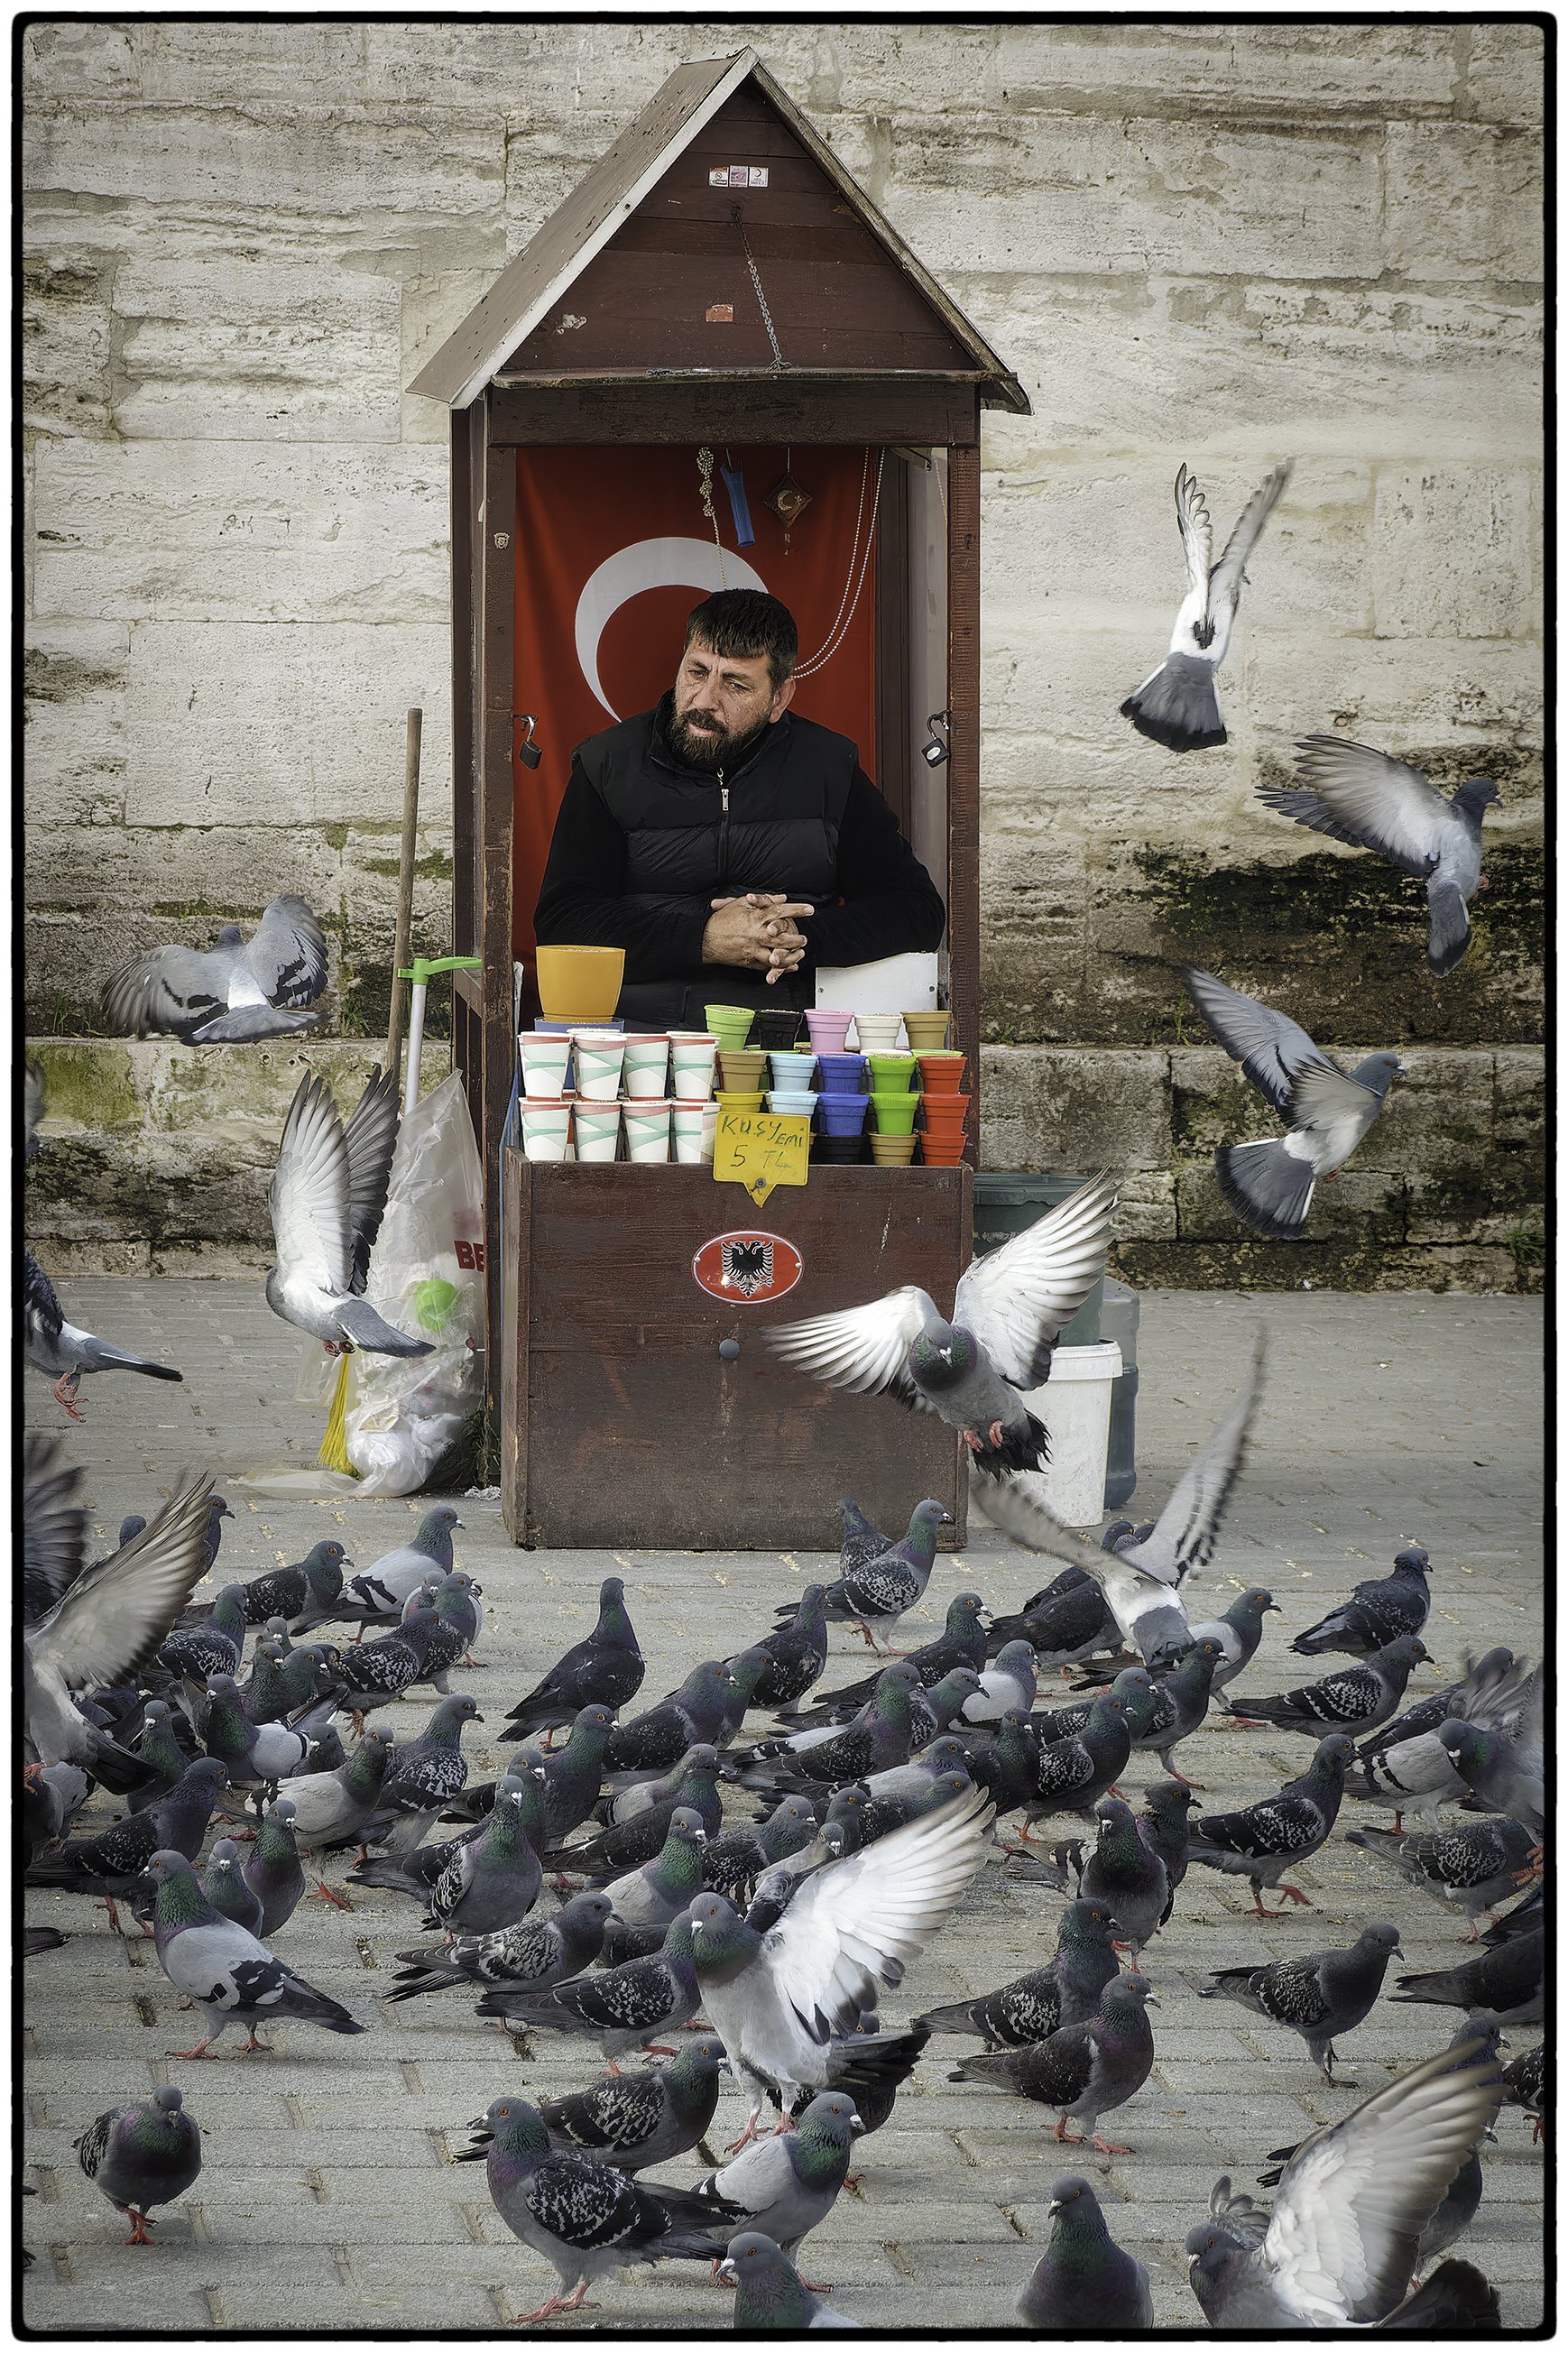 $.25 (5 lira) to feed the pigeons.    